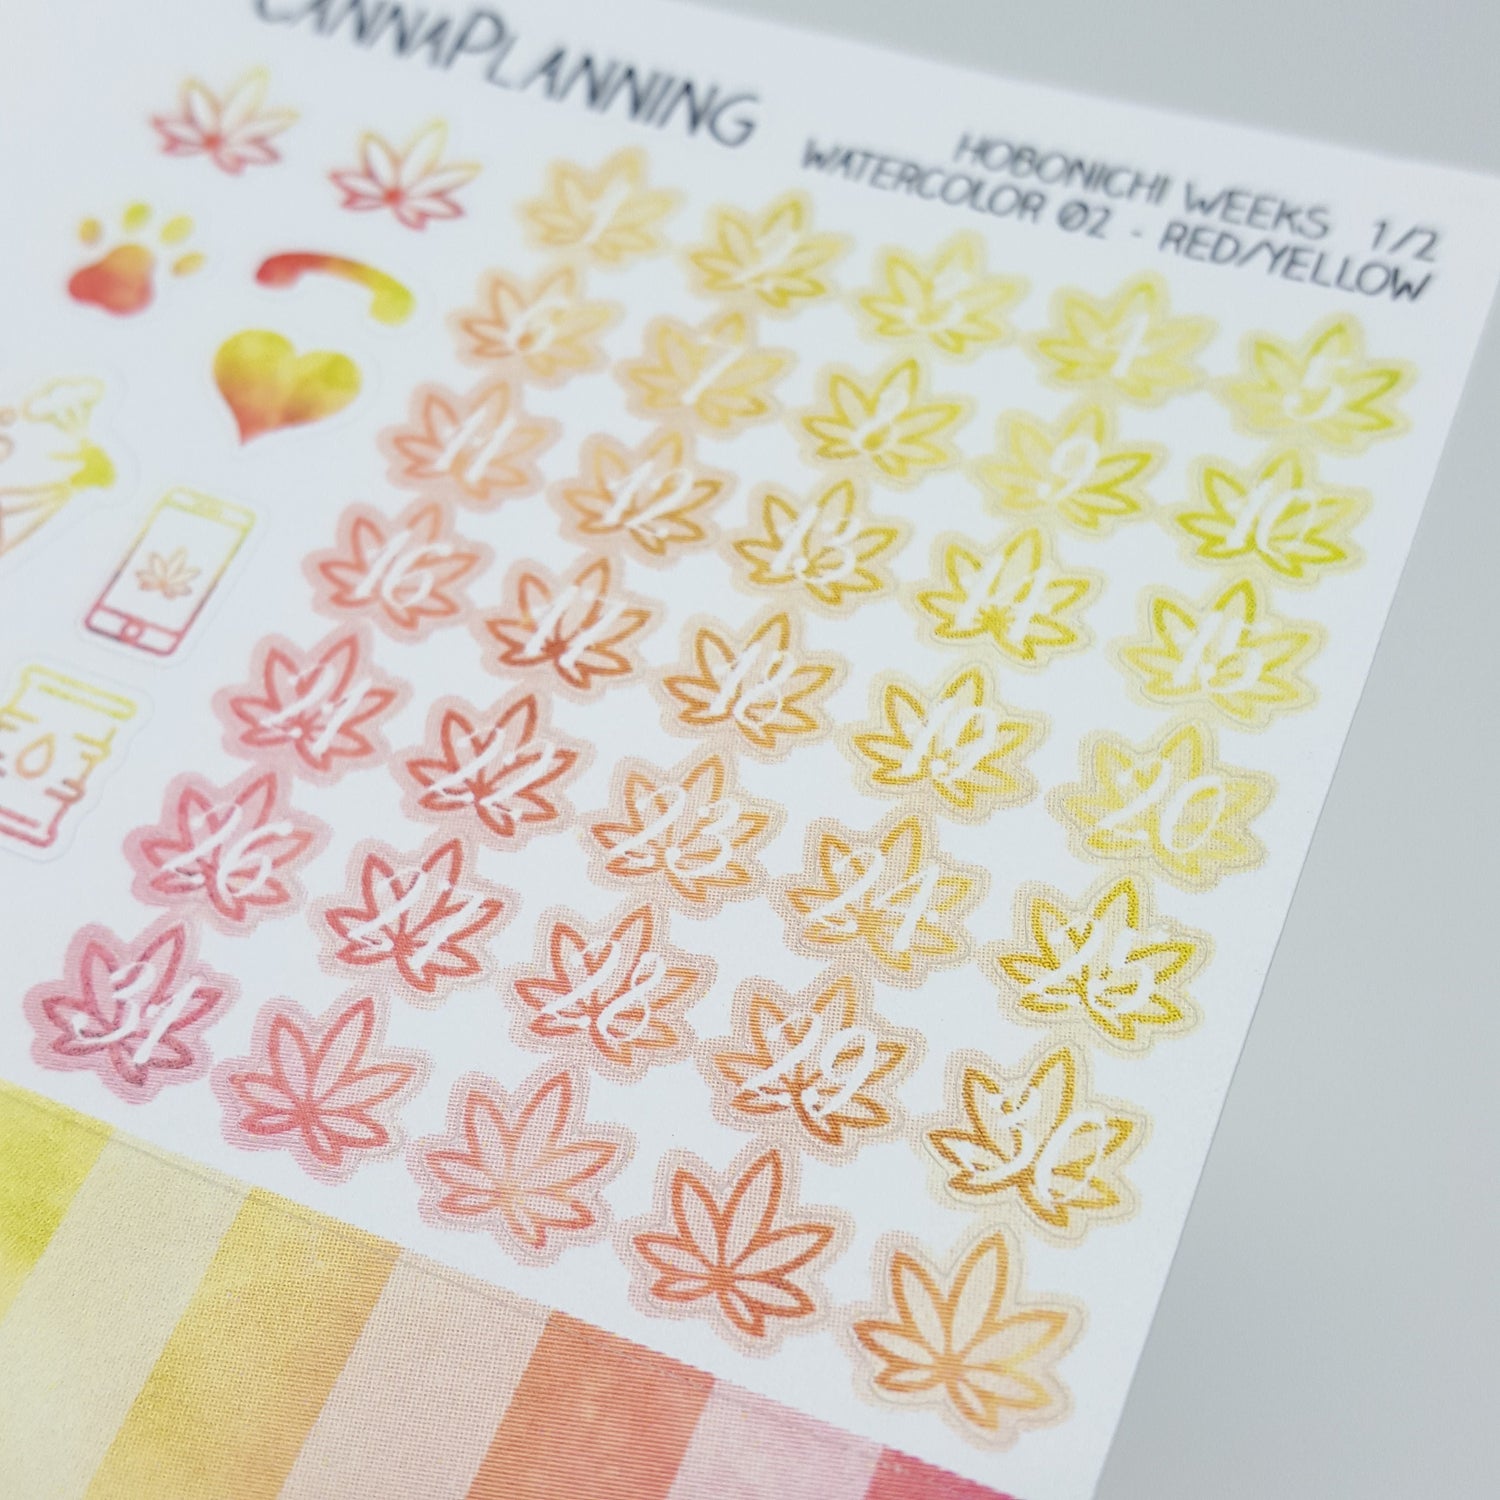 Red, Orange, & Yellow Watercolor Hobonichi Weeks Marijuana Sticker Kit *Retiring Design*  (7003851554993)